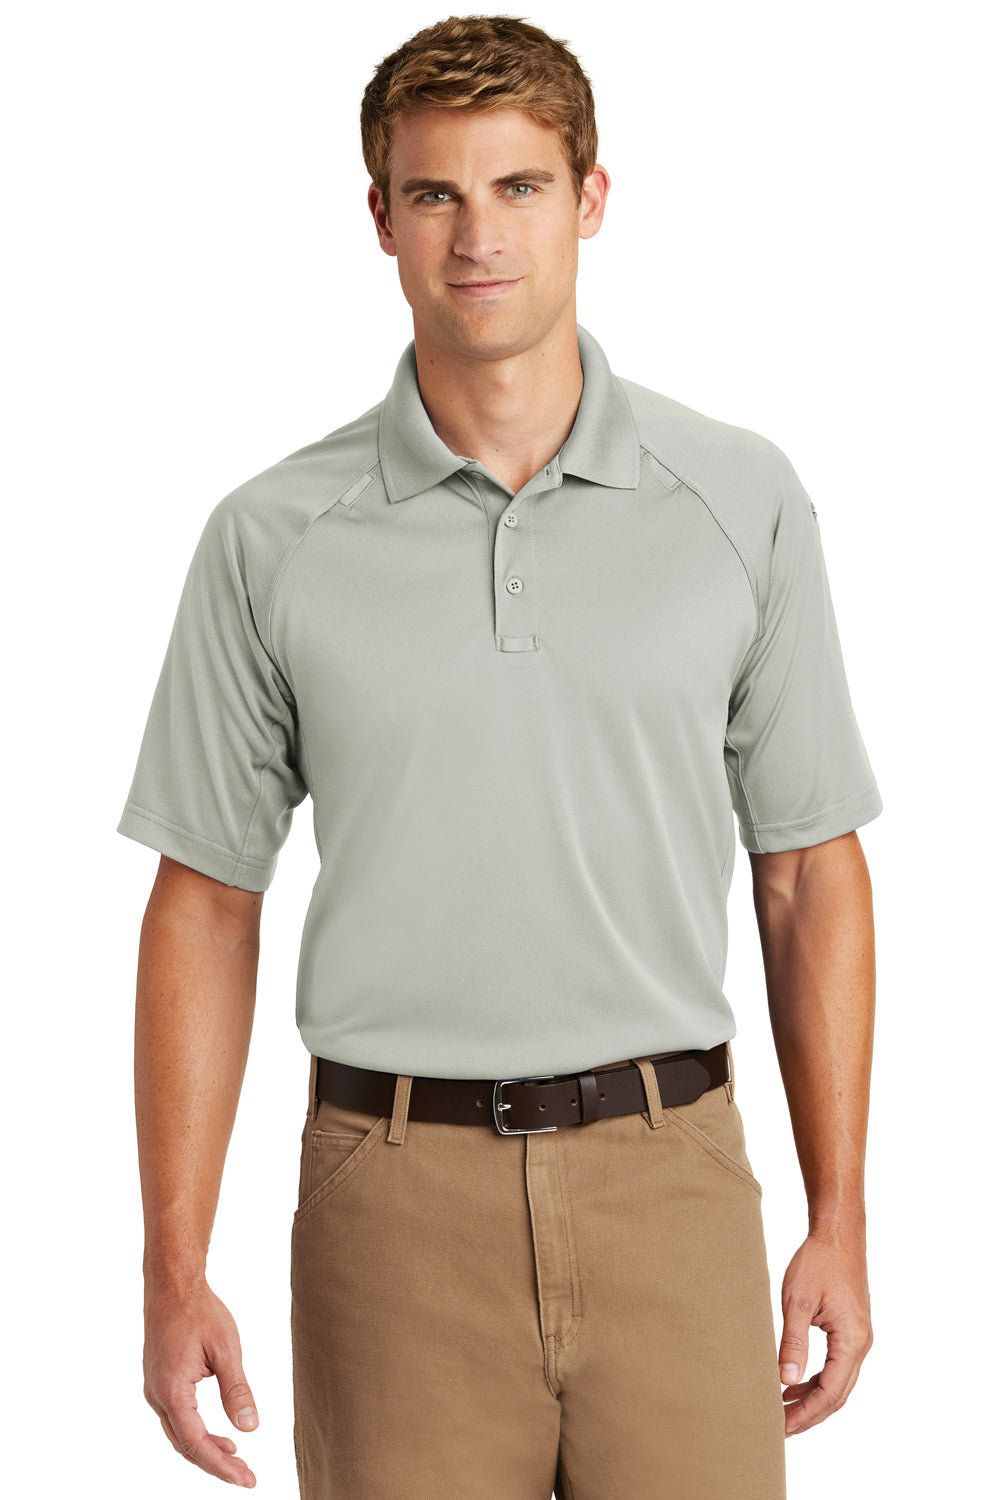 CornerStone CS410 Mens Select Tactical Moisture Wicking Short Sleeve Polo Shirt Light Grey Front